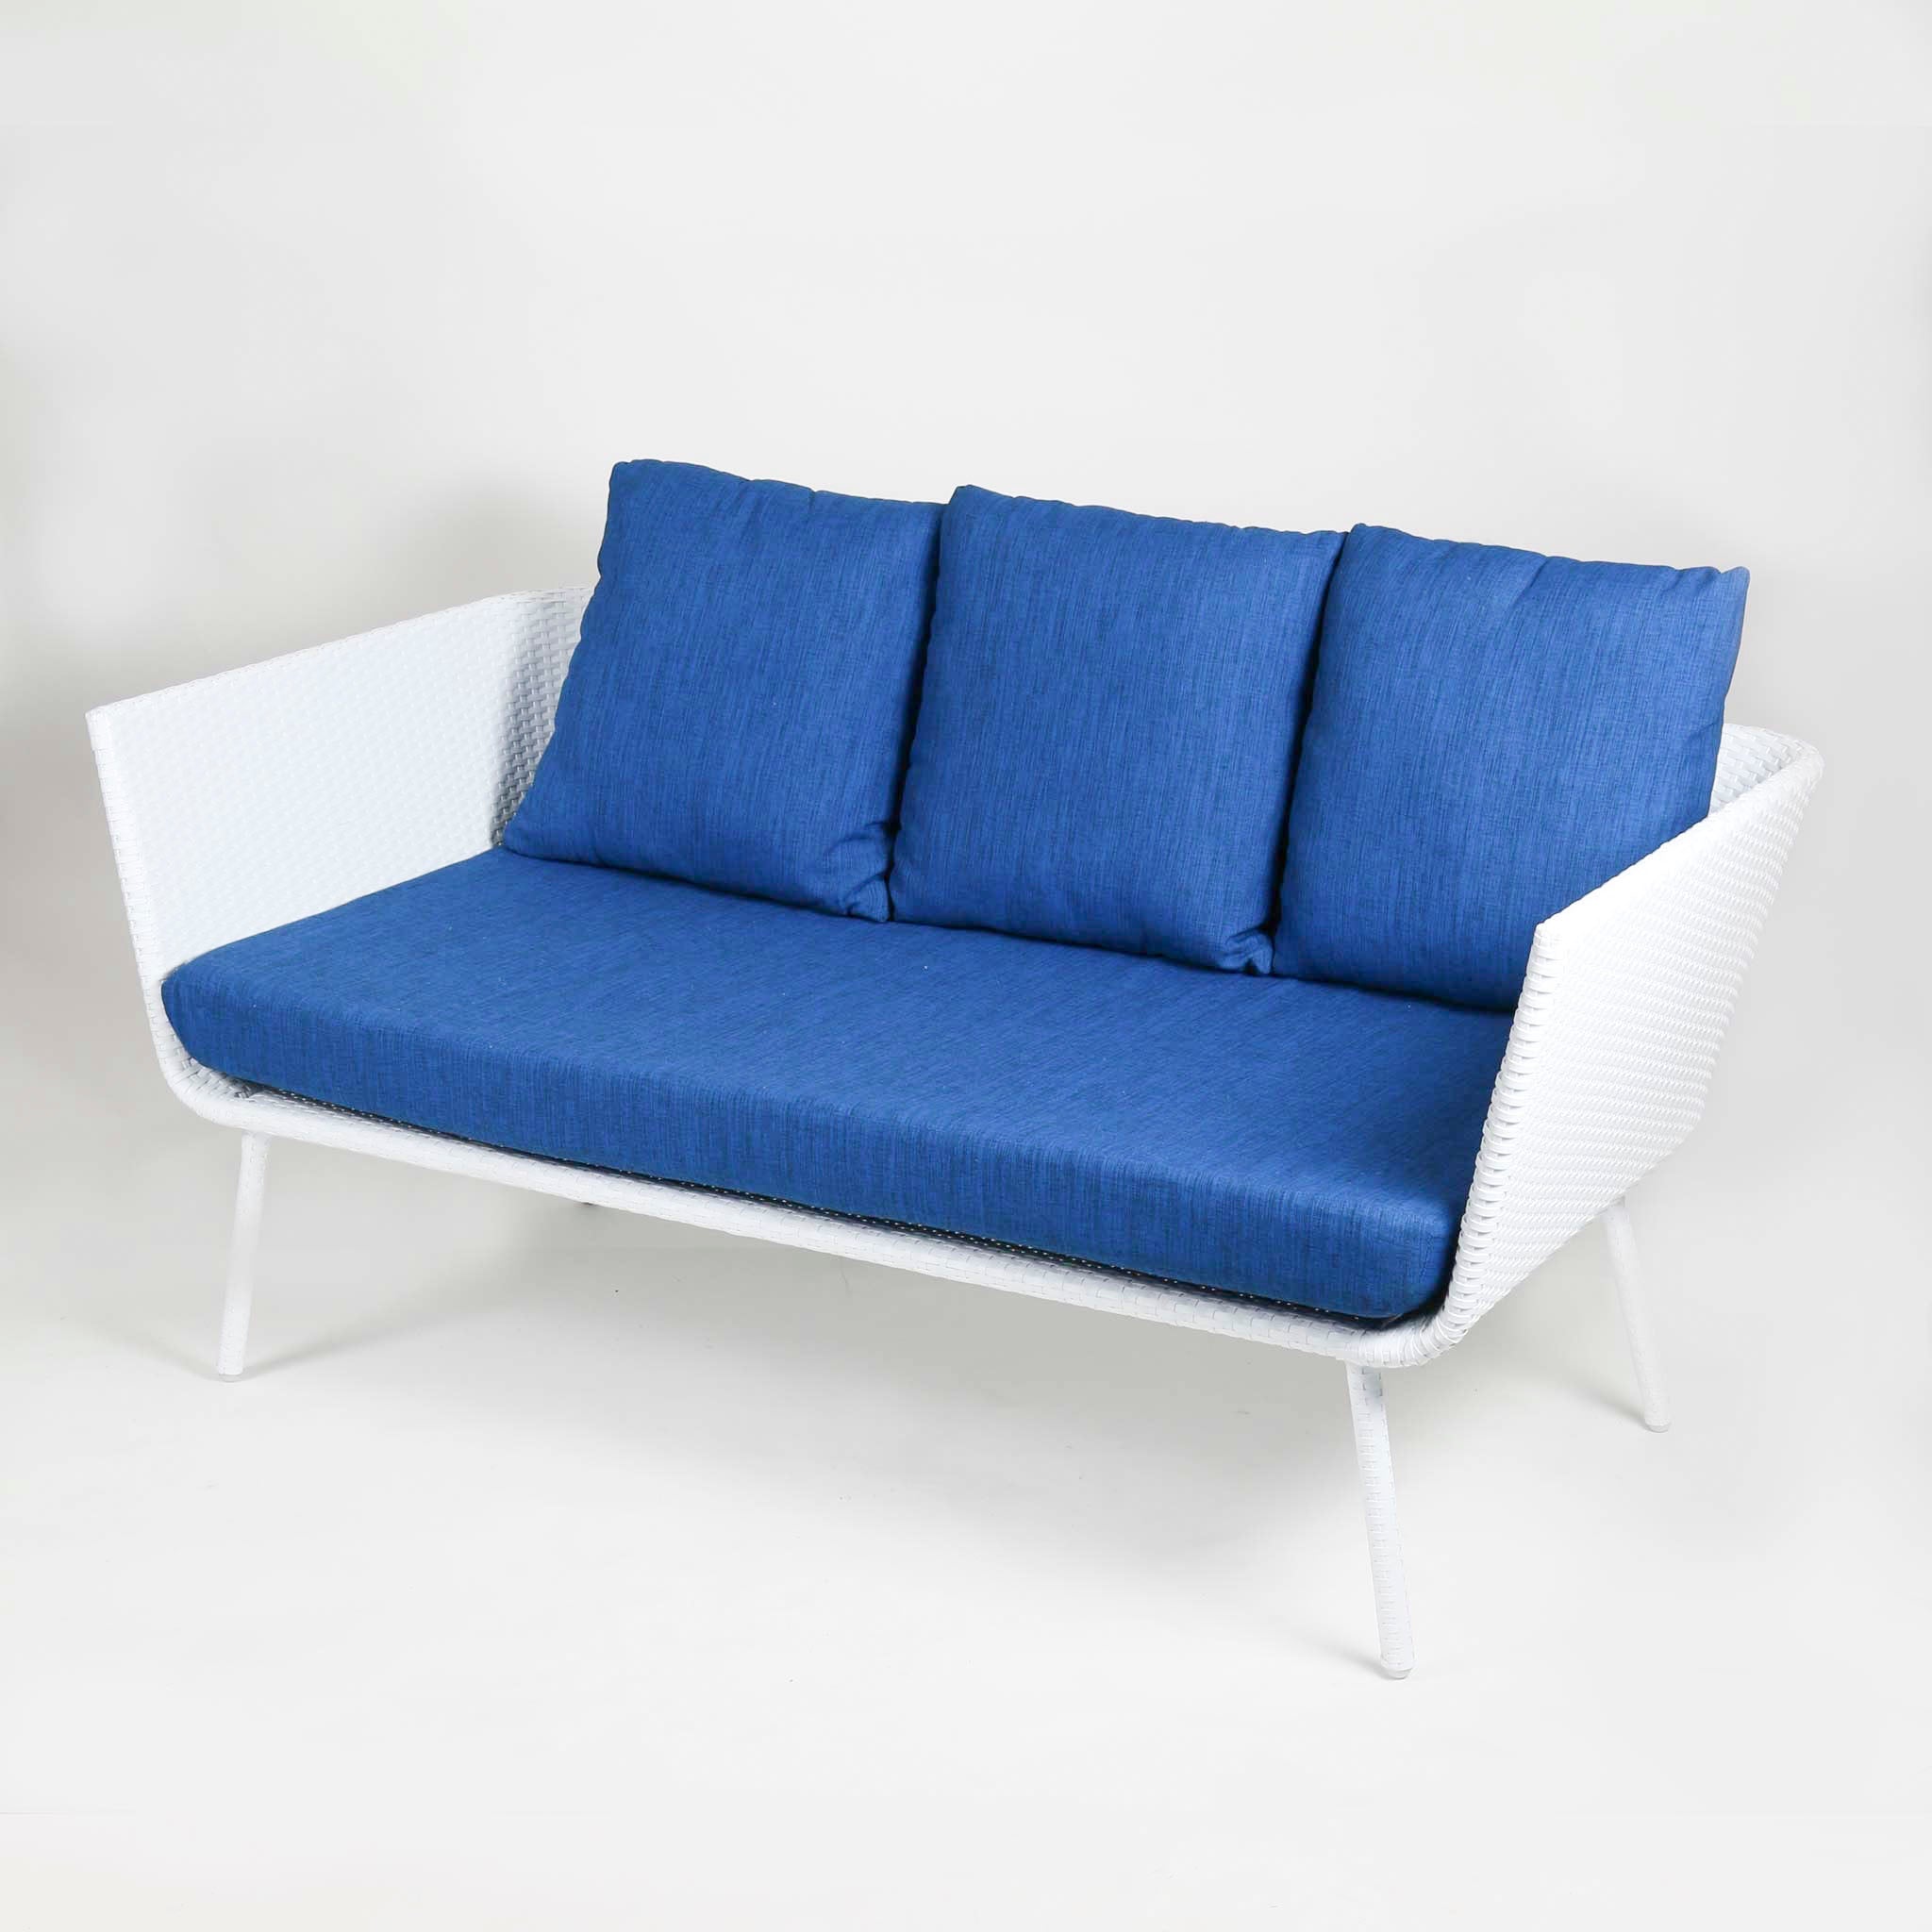 'Santorini' Synthetic Wicker Four Piece Sofa Setting